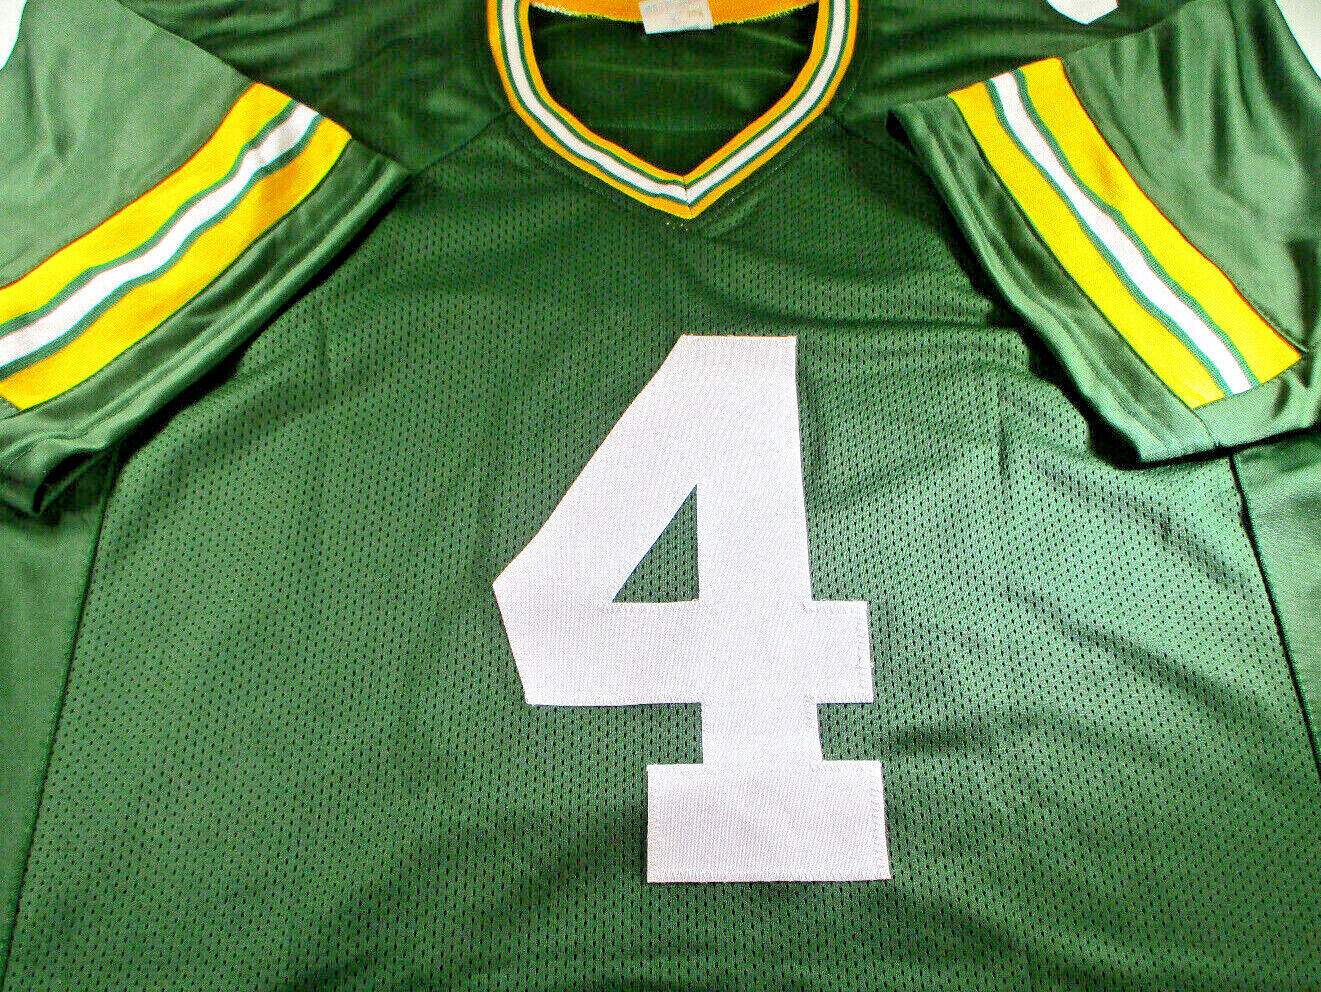 Brett Favre / Autographed Green Bay Packers Custom Football Jersey / Favre Holo